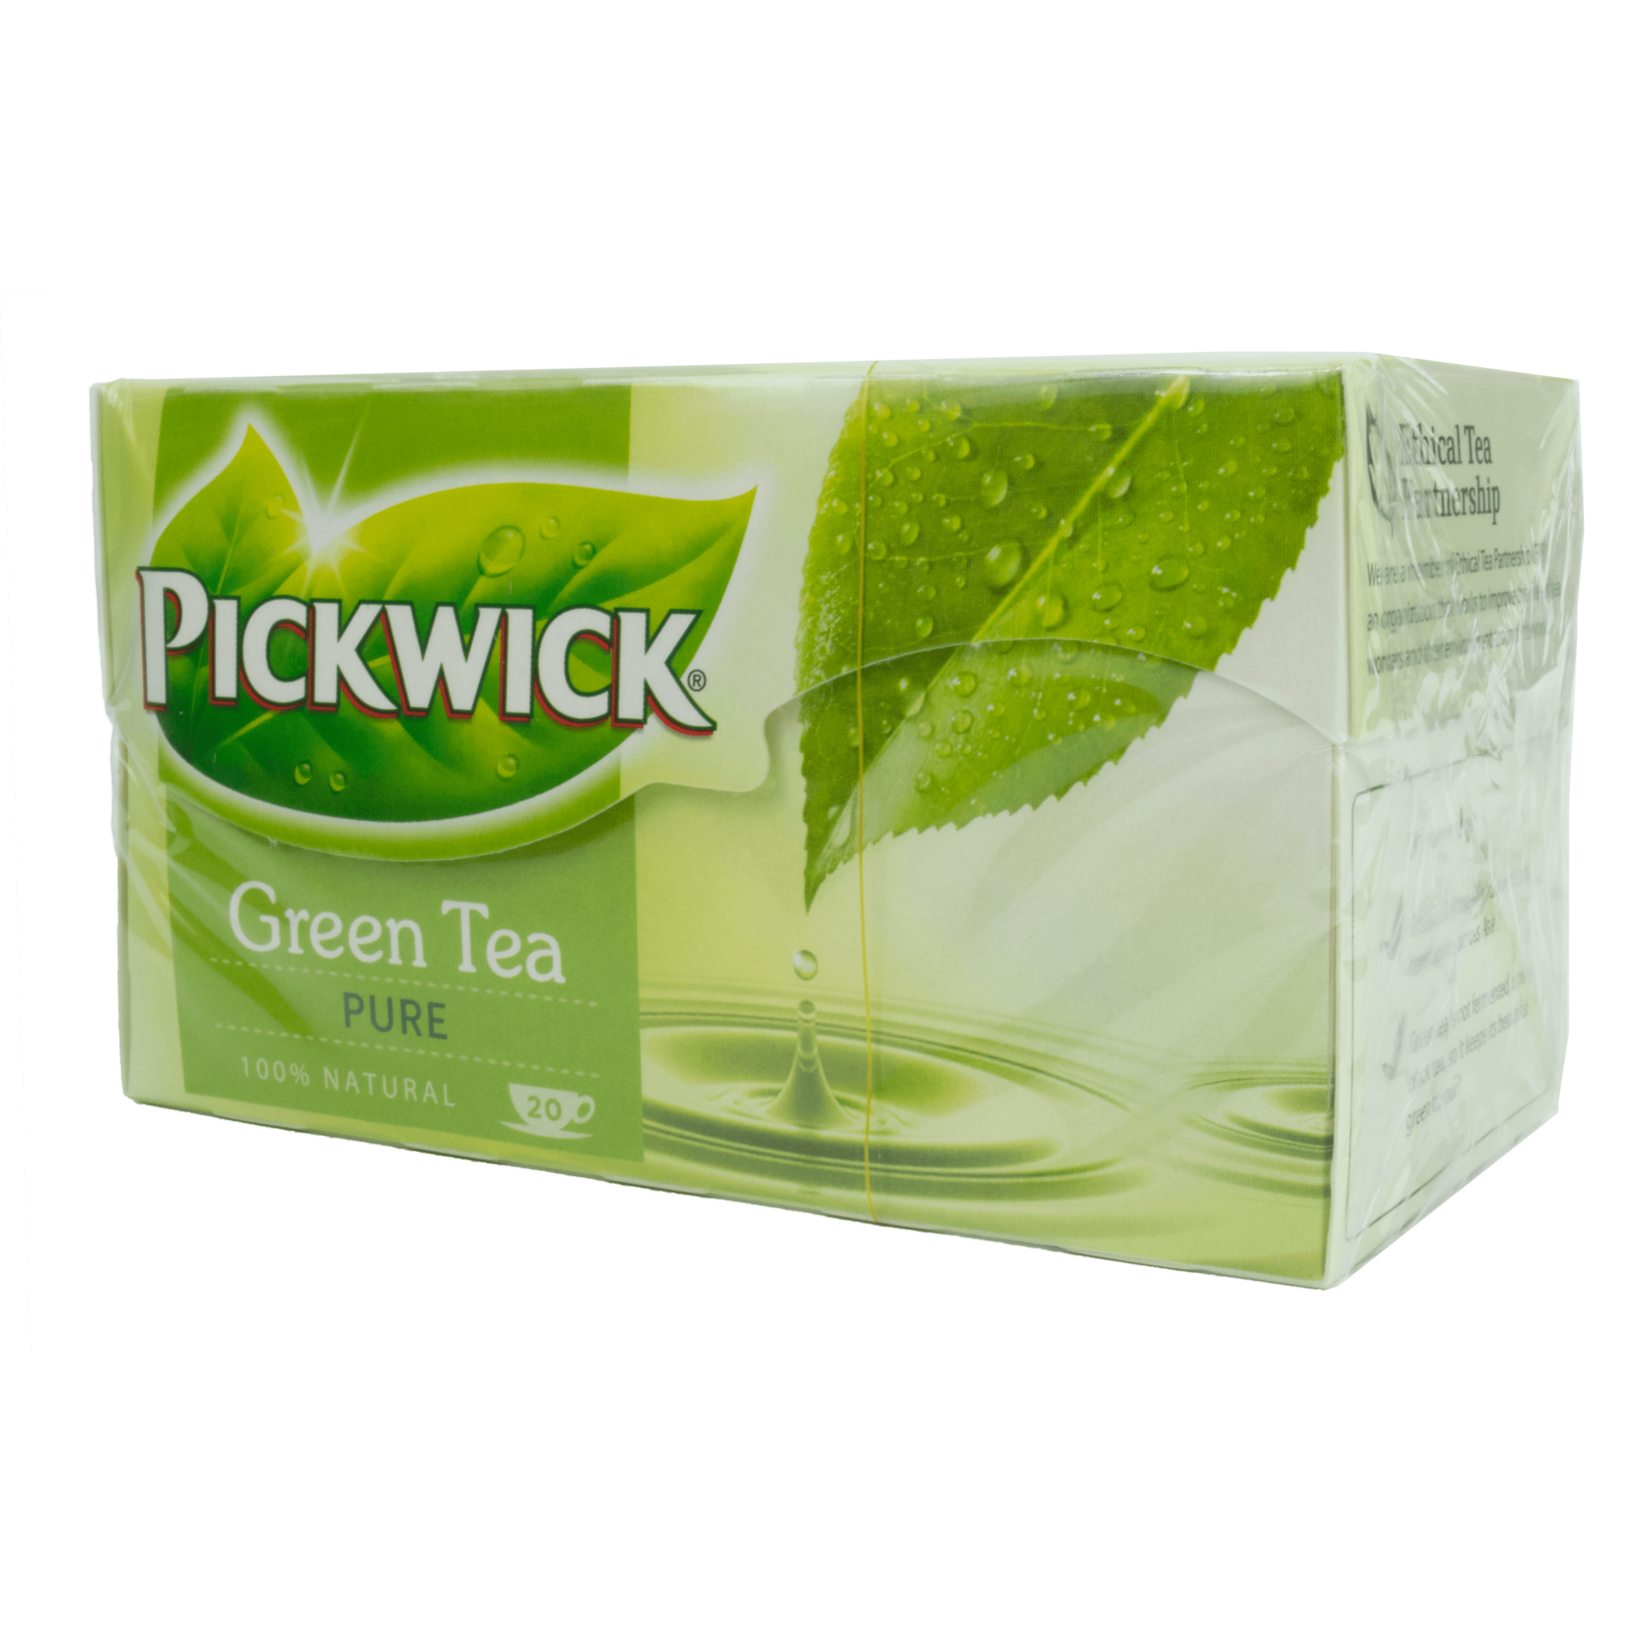 Pickwick Pickwick Pure Green Tea